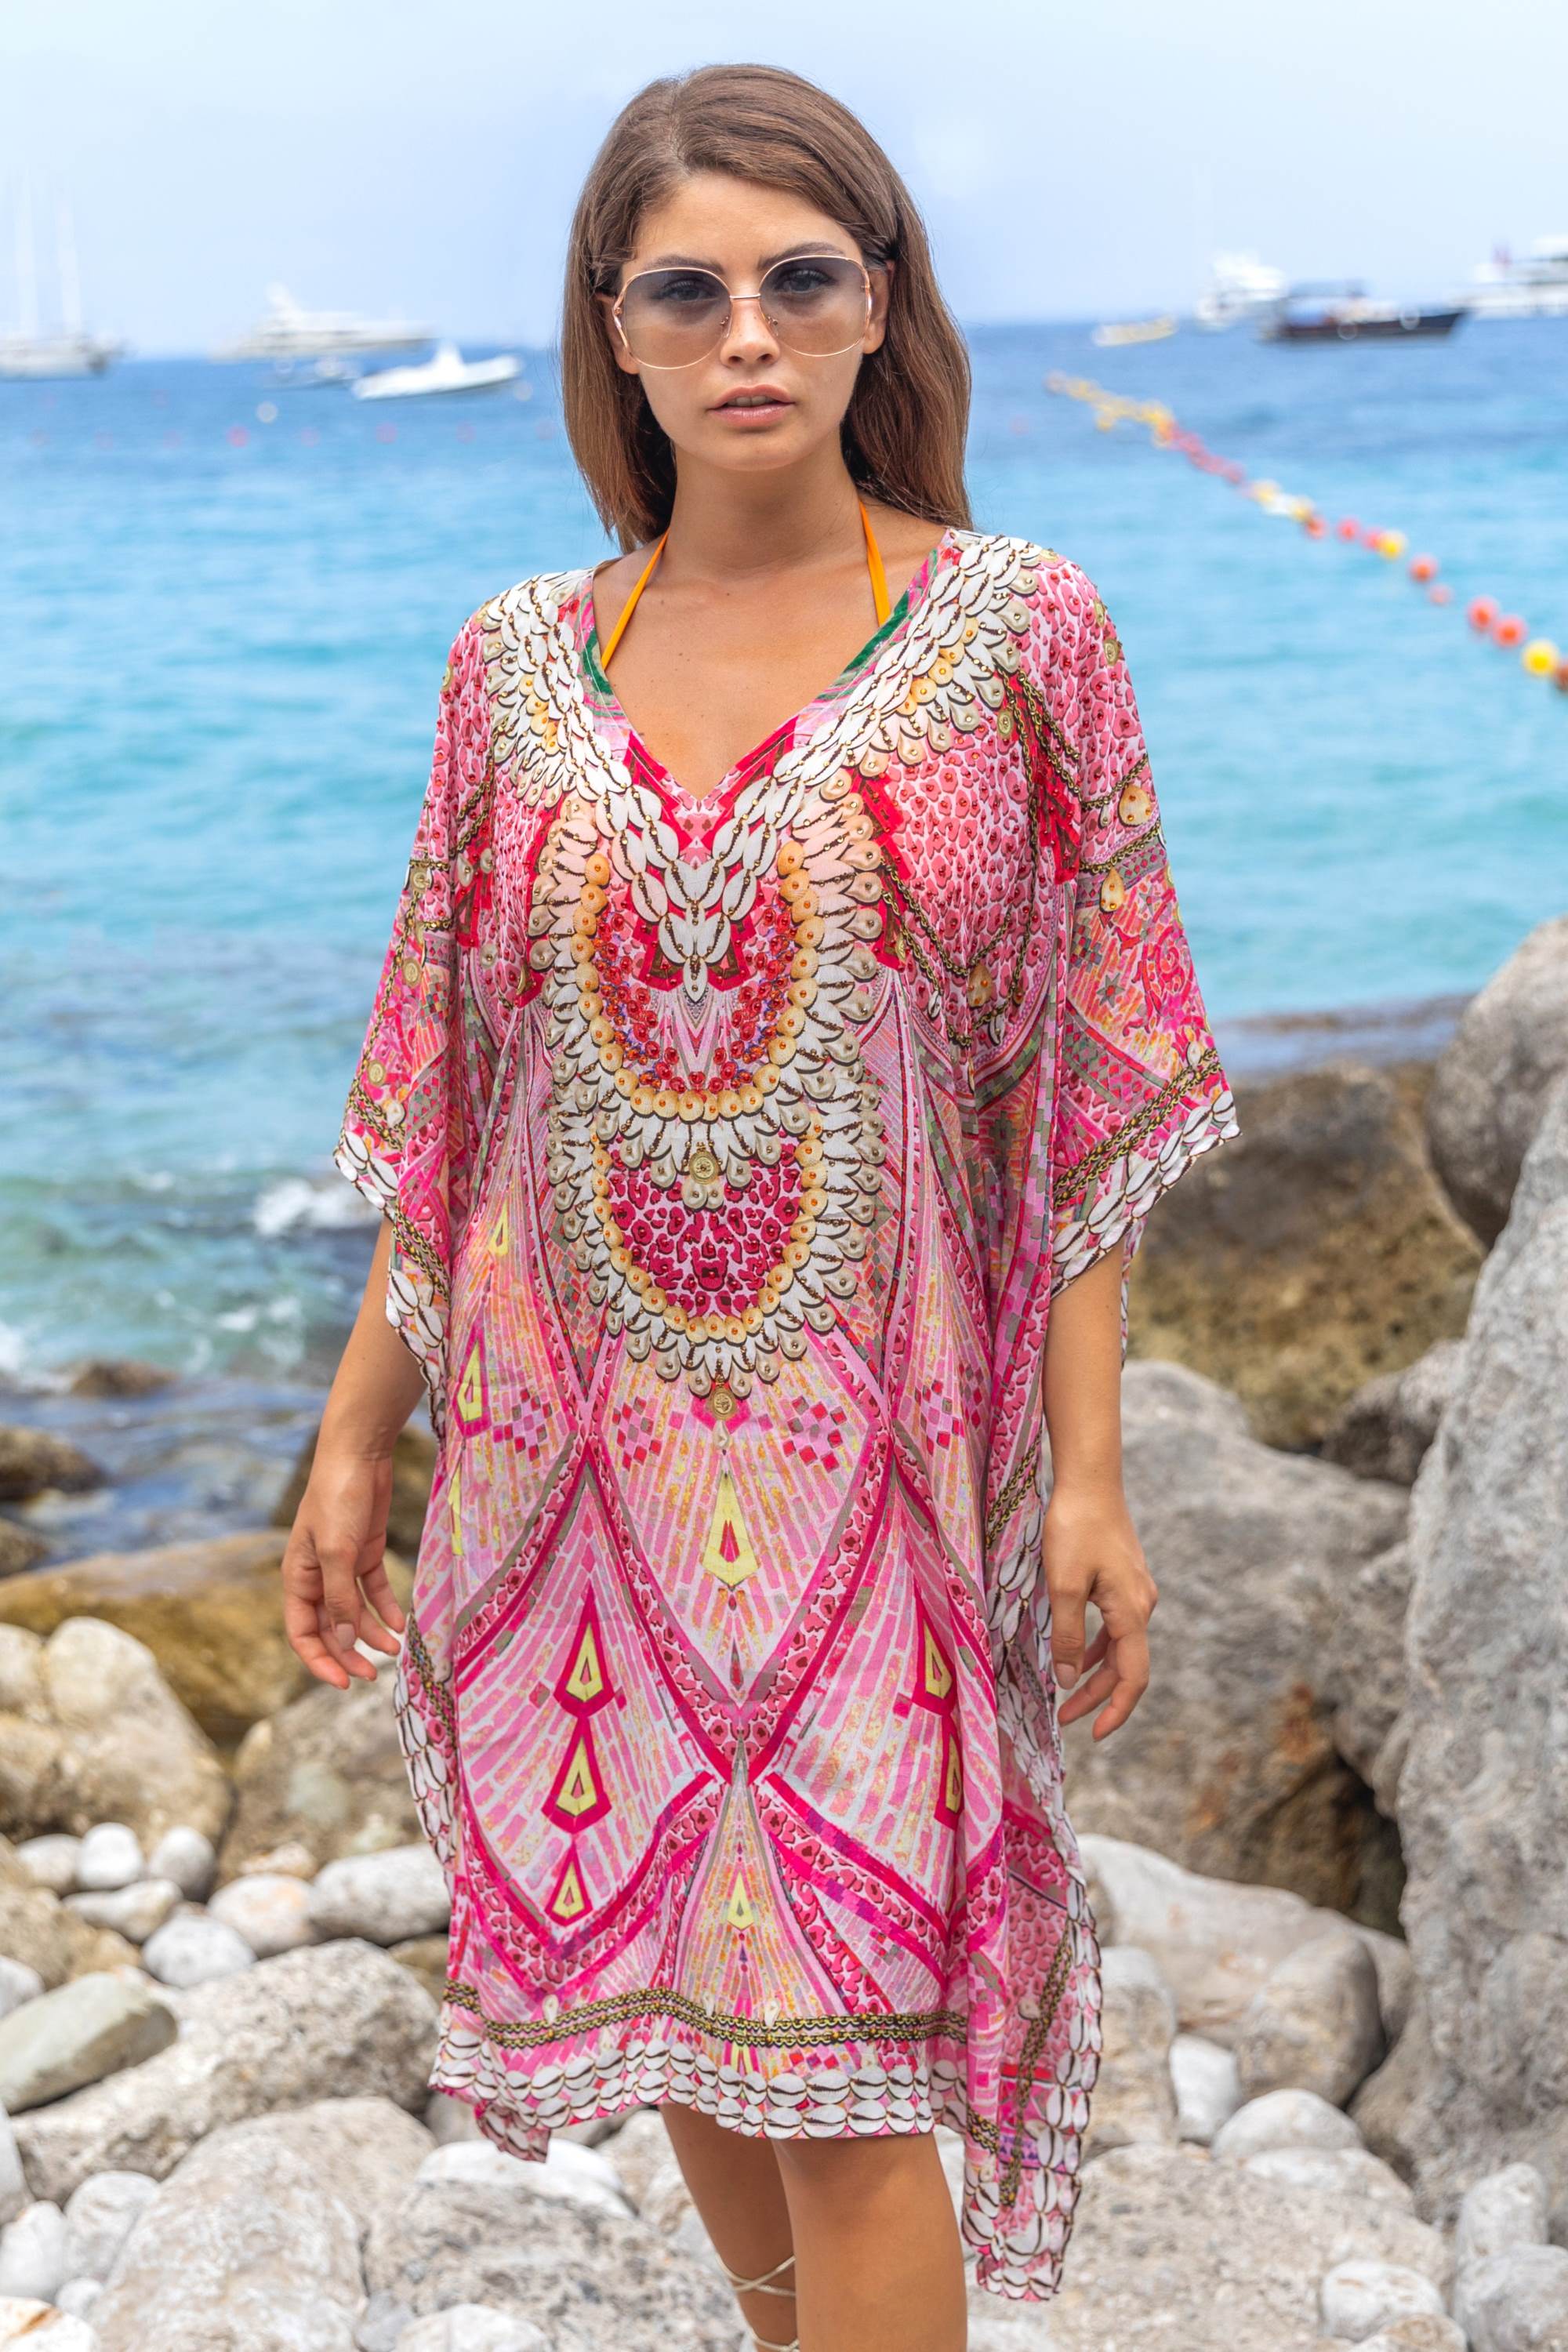 Pink silk floaty designer kaftans to wear on holiday by Lindsey Brown luxury resort wear 